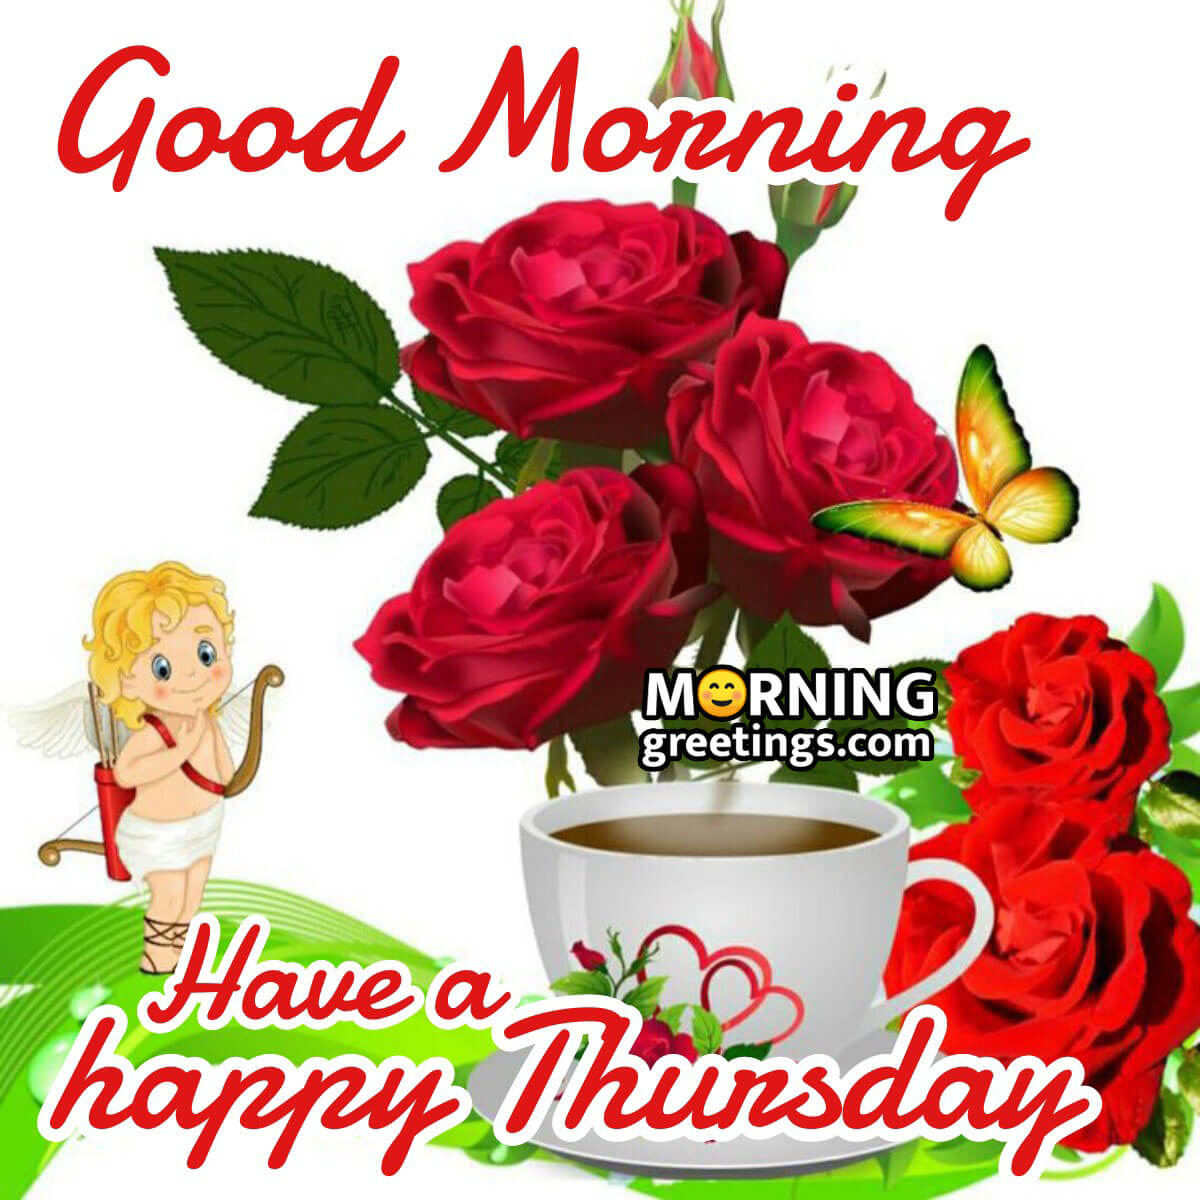 50 Good Morning Happy Thursday Images - Morning Greetings – Morning ...